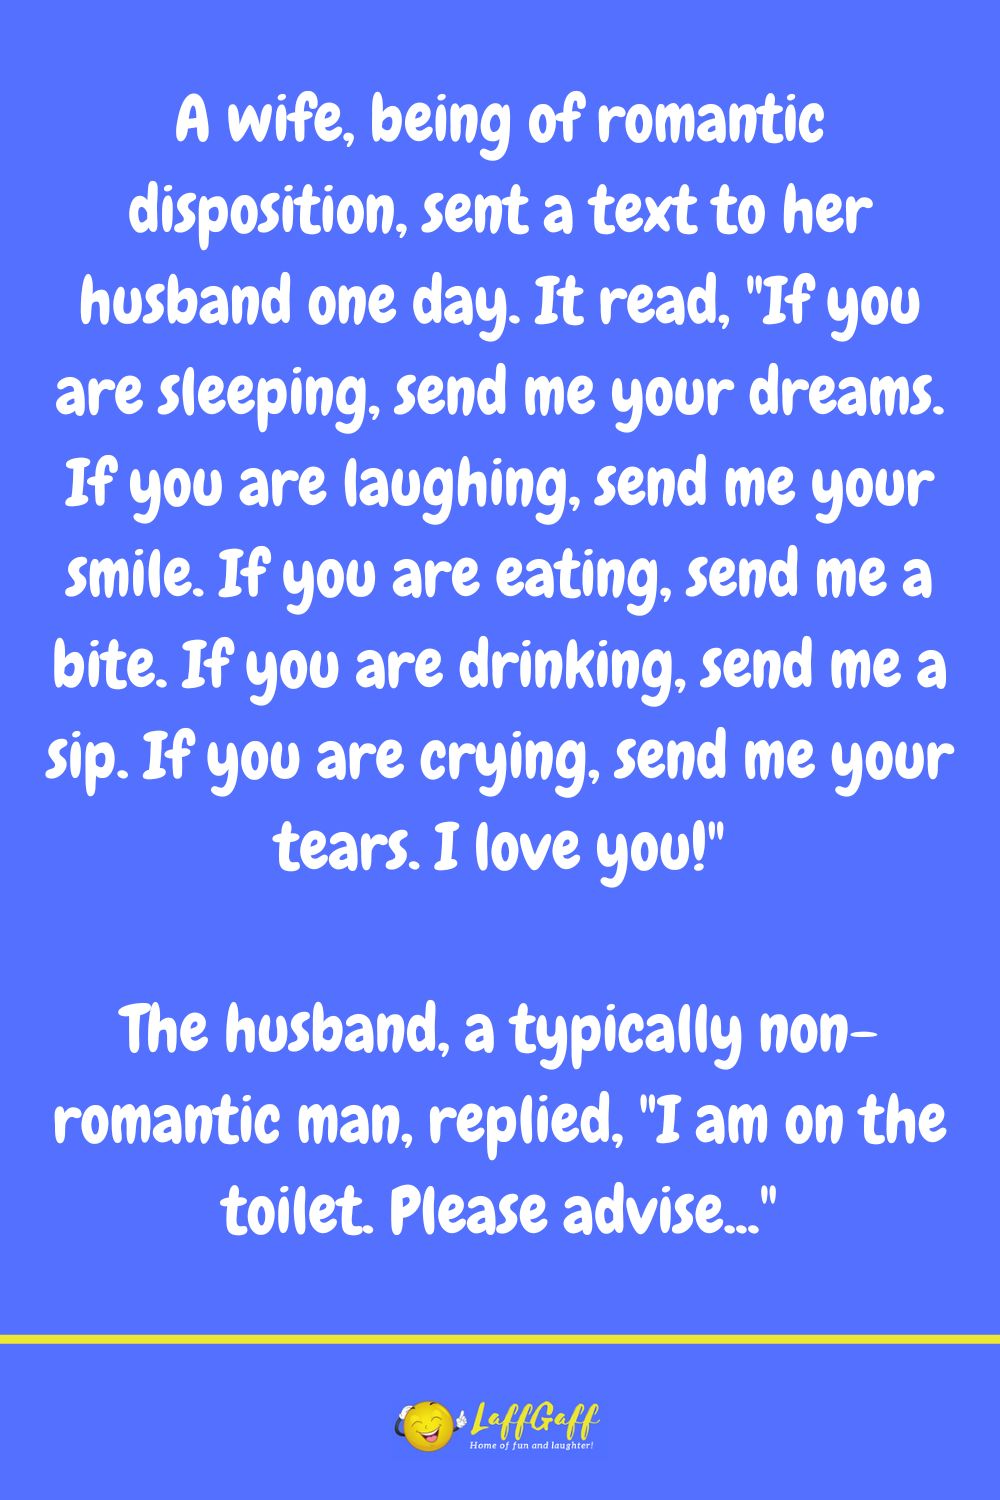 Romantic husband joke from LaffGaff.